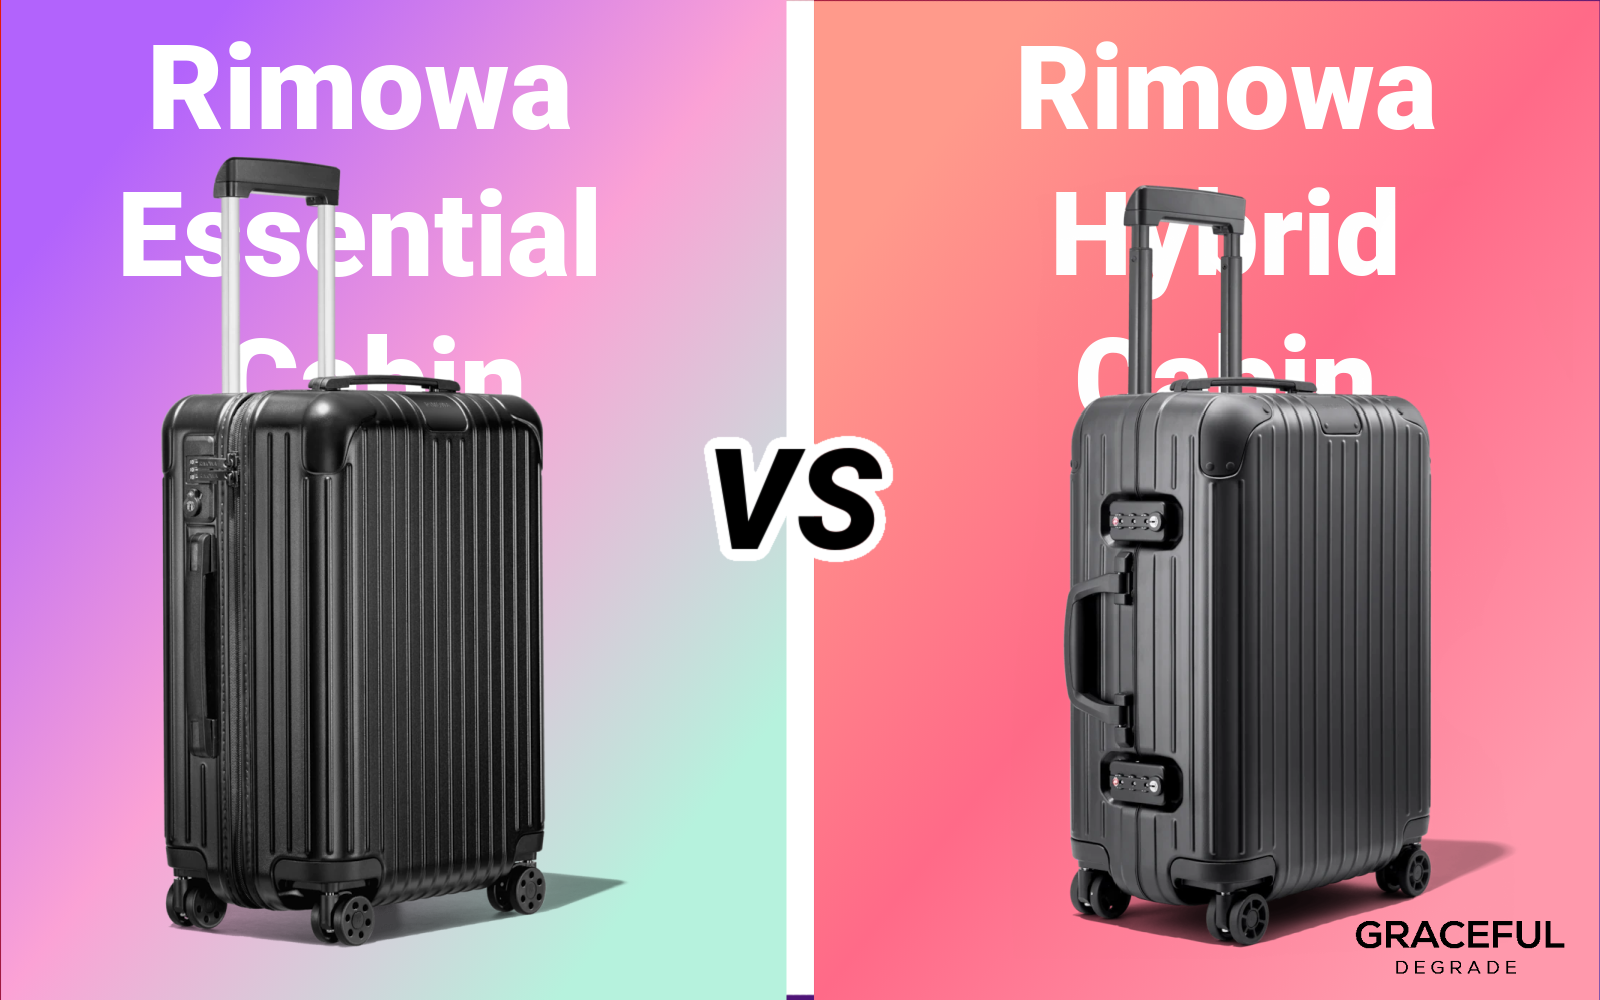 Rimowa Essential Cabin vs Rimowa Hybrid Cabin | Gracefuldegrade